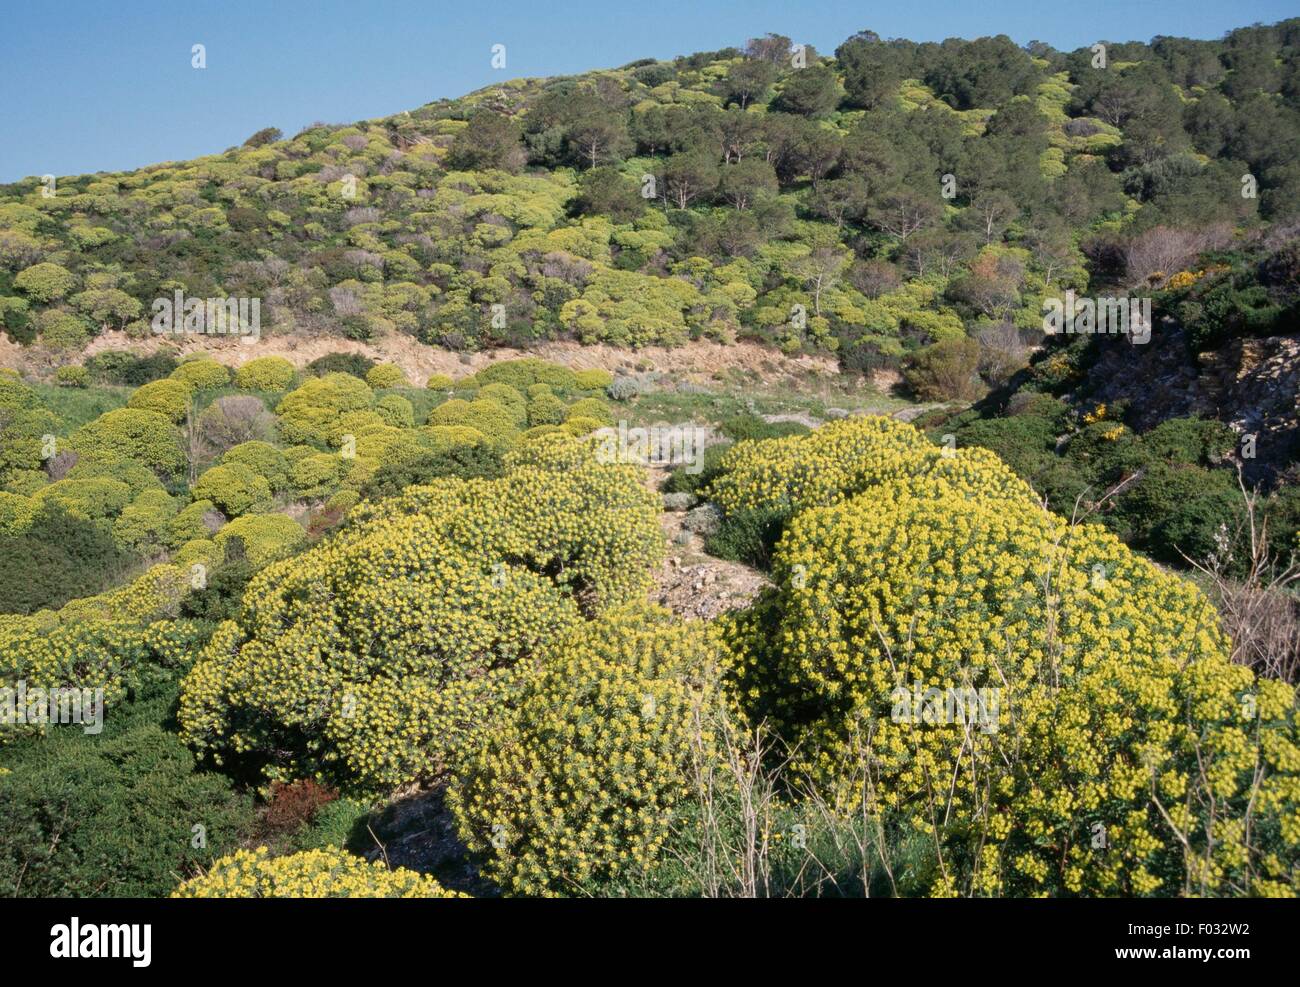 Maquis shrubland, Capo dell'Argentiera headland, Nurra, Sardinia, Italy. Stock Photo